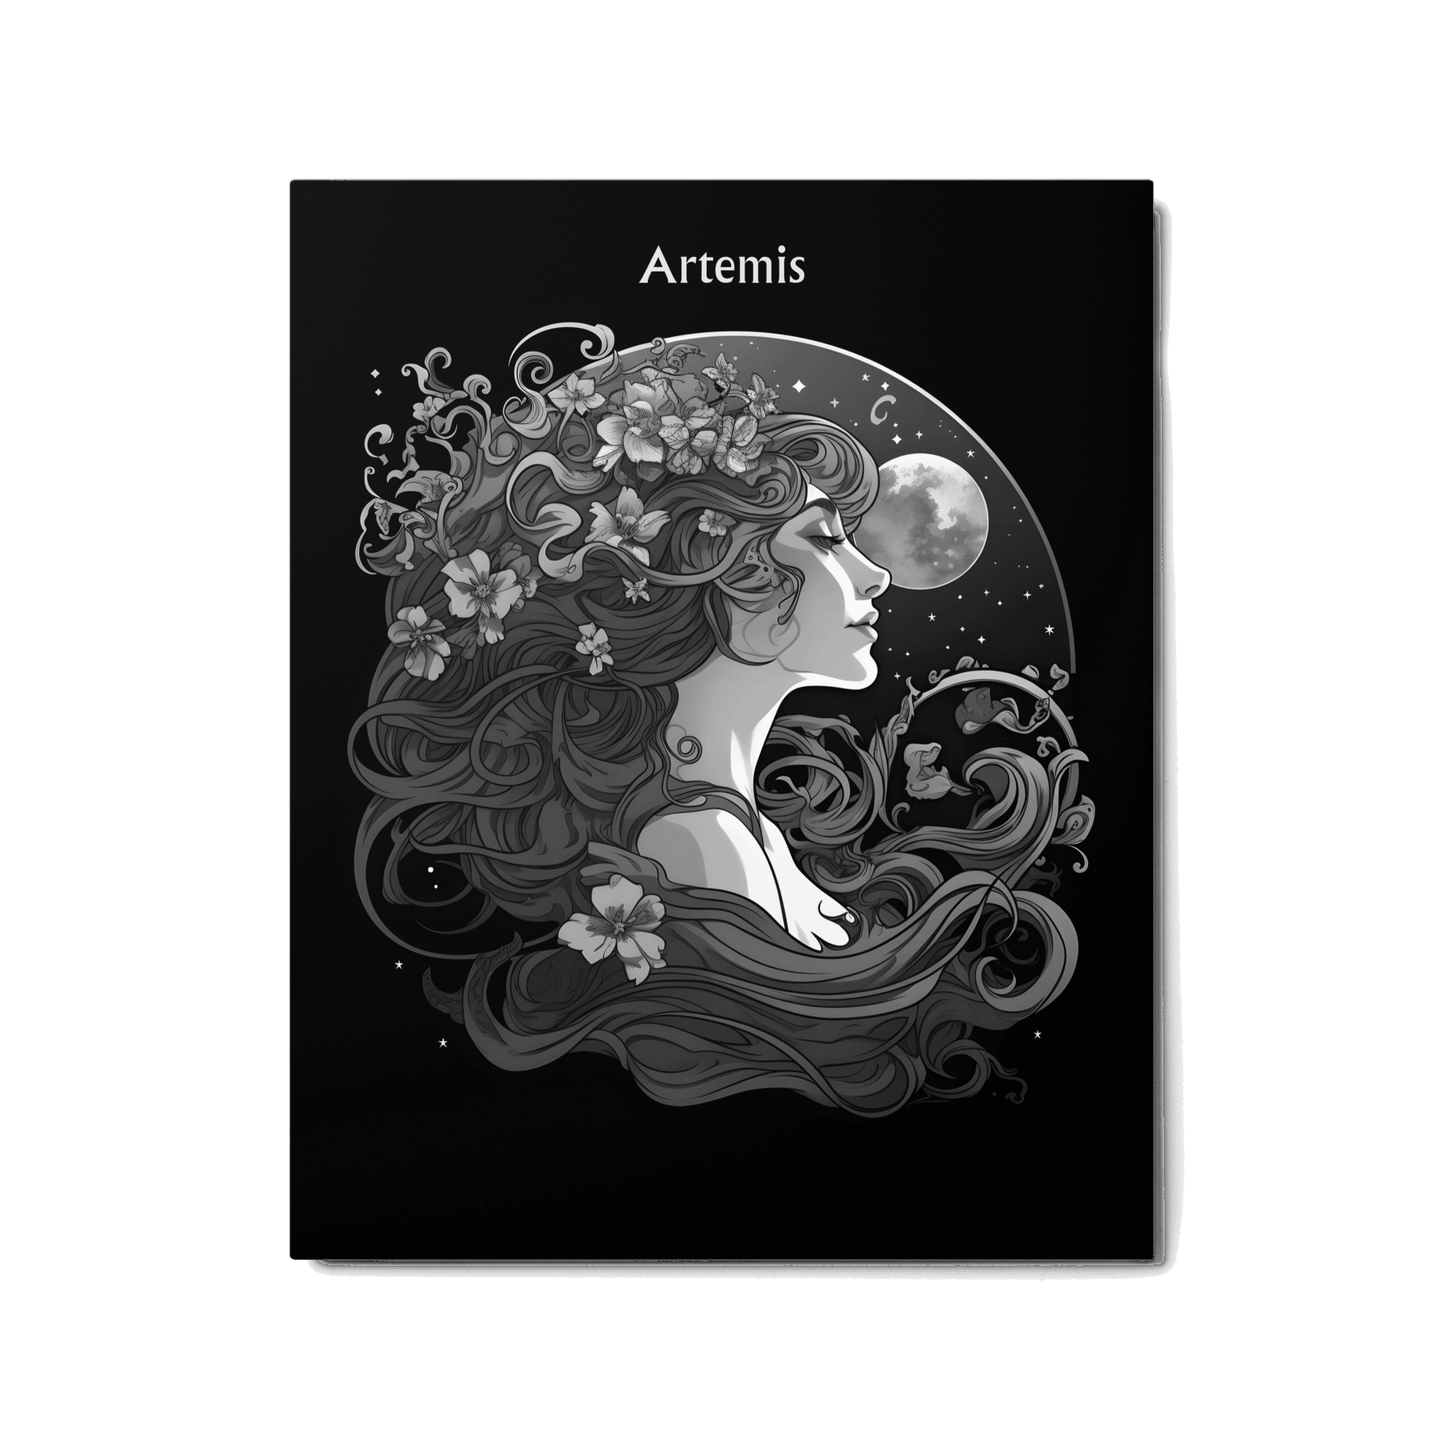 Artemis' Perception - Black and White Hanging Wall Art High Quality Metal Print DrawDadDraw